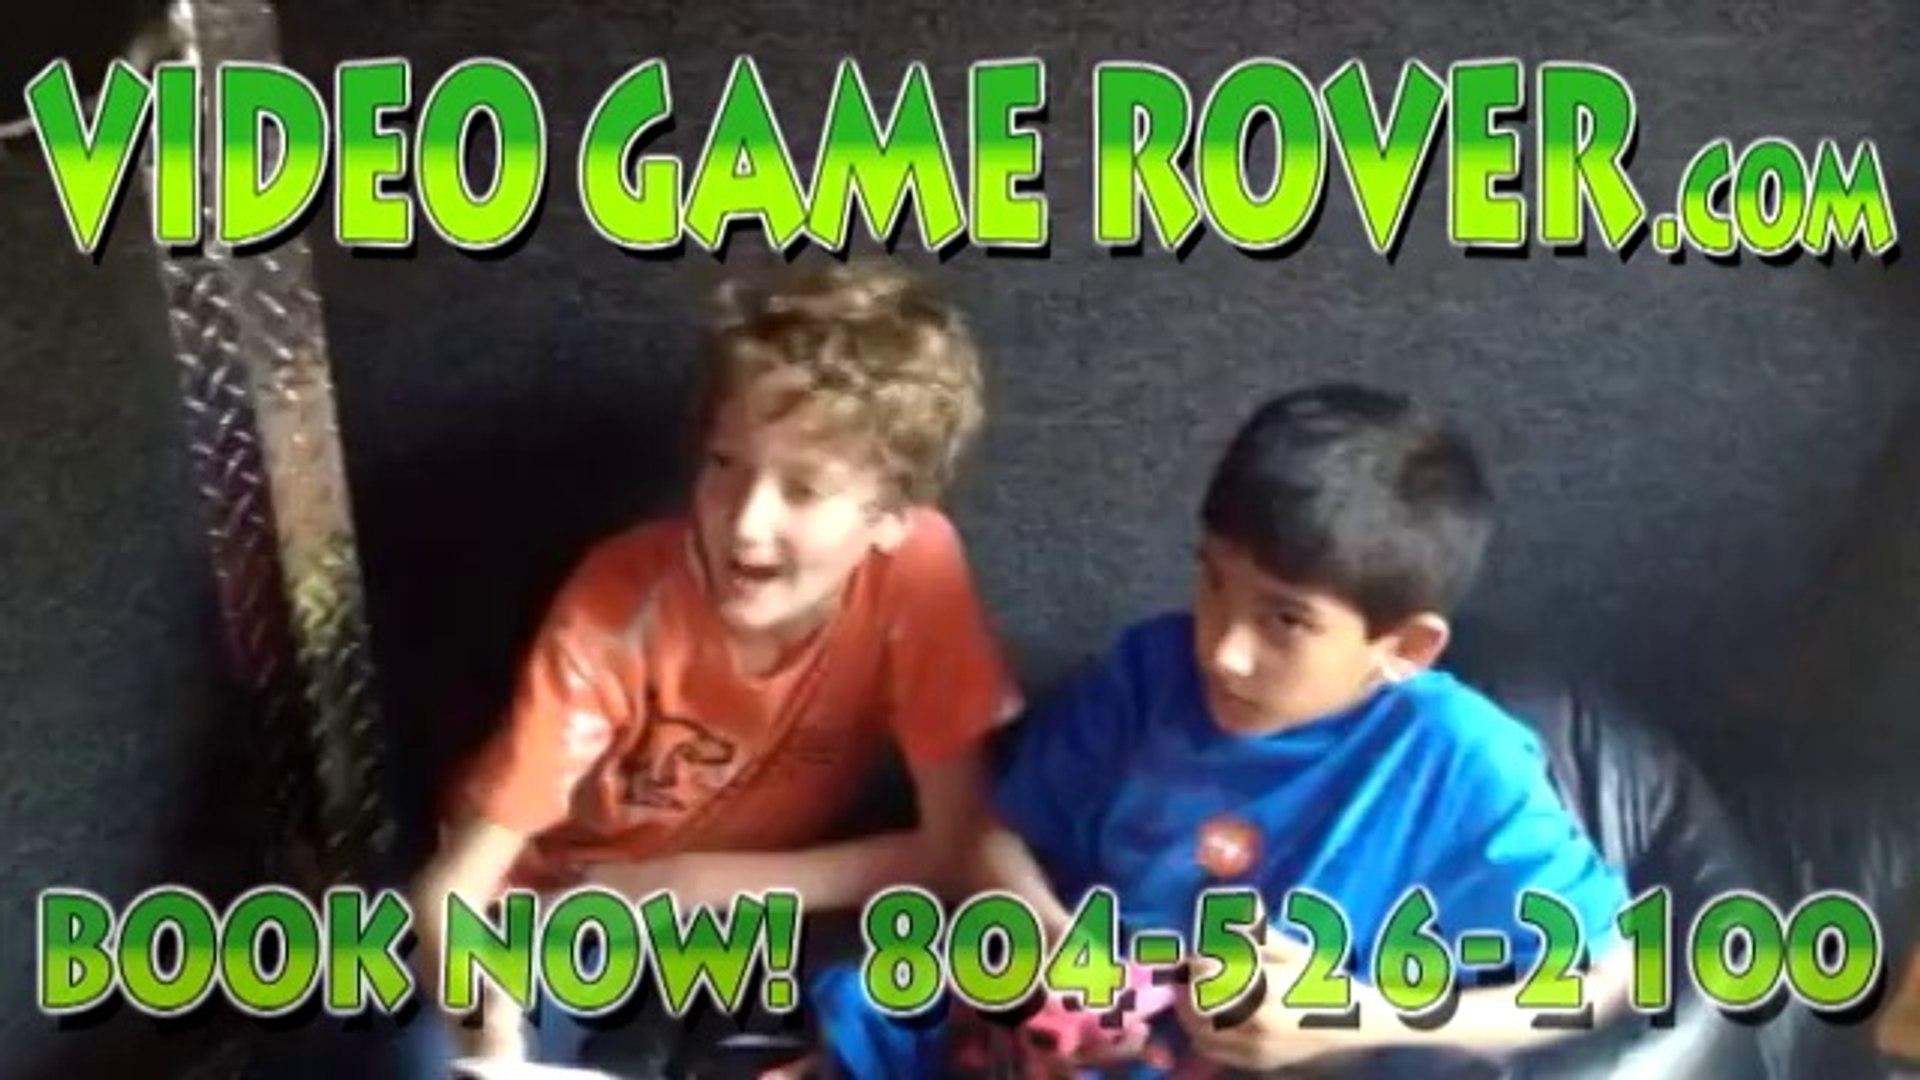 Mobile Video Game Trailer - Video Game Rover in Richmond, Virginia